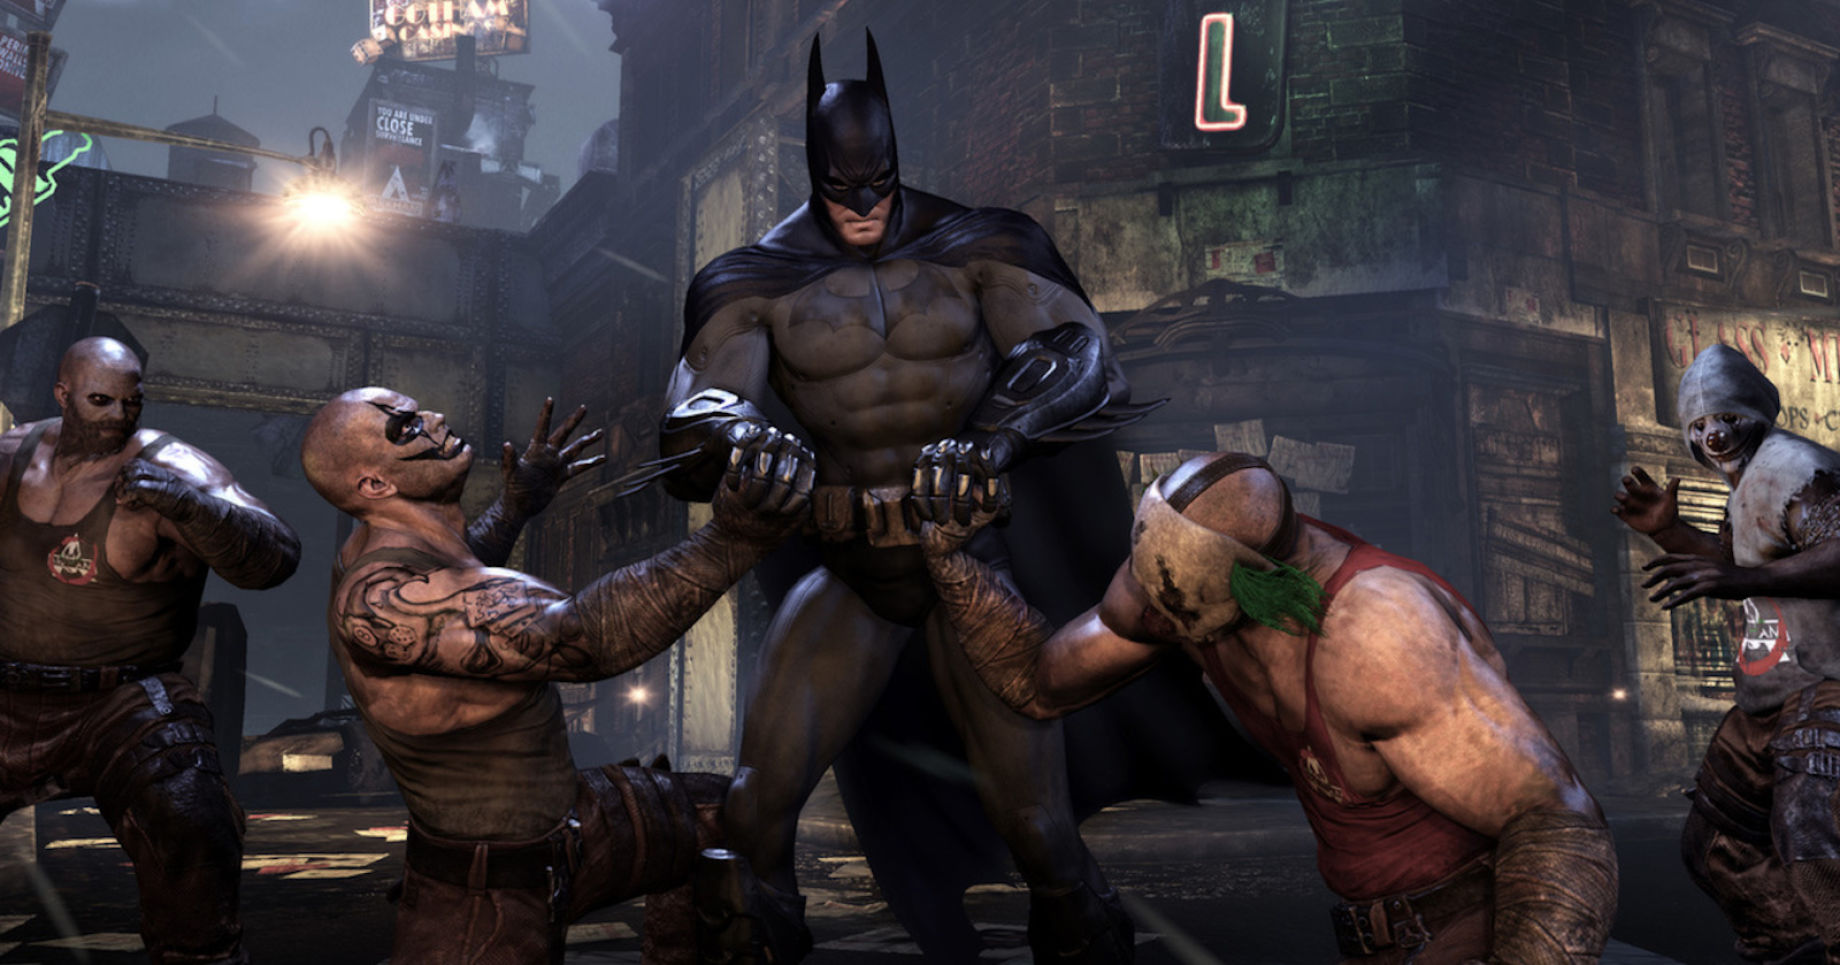 Batman: Arkham Trilogy on Switch gets release date